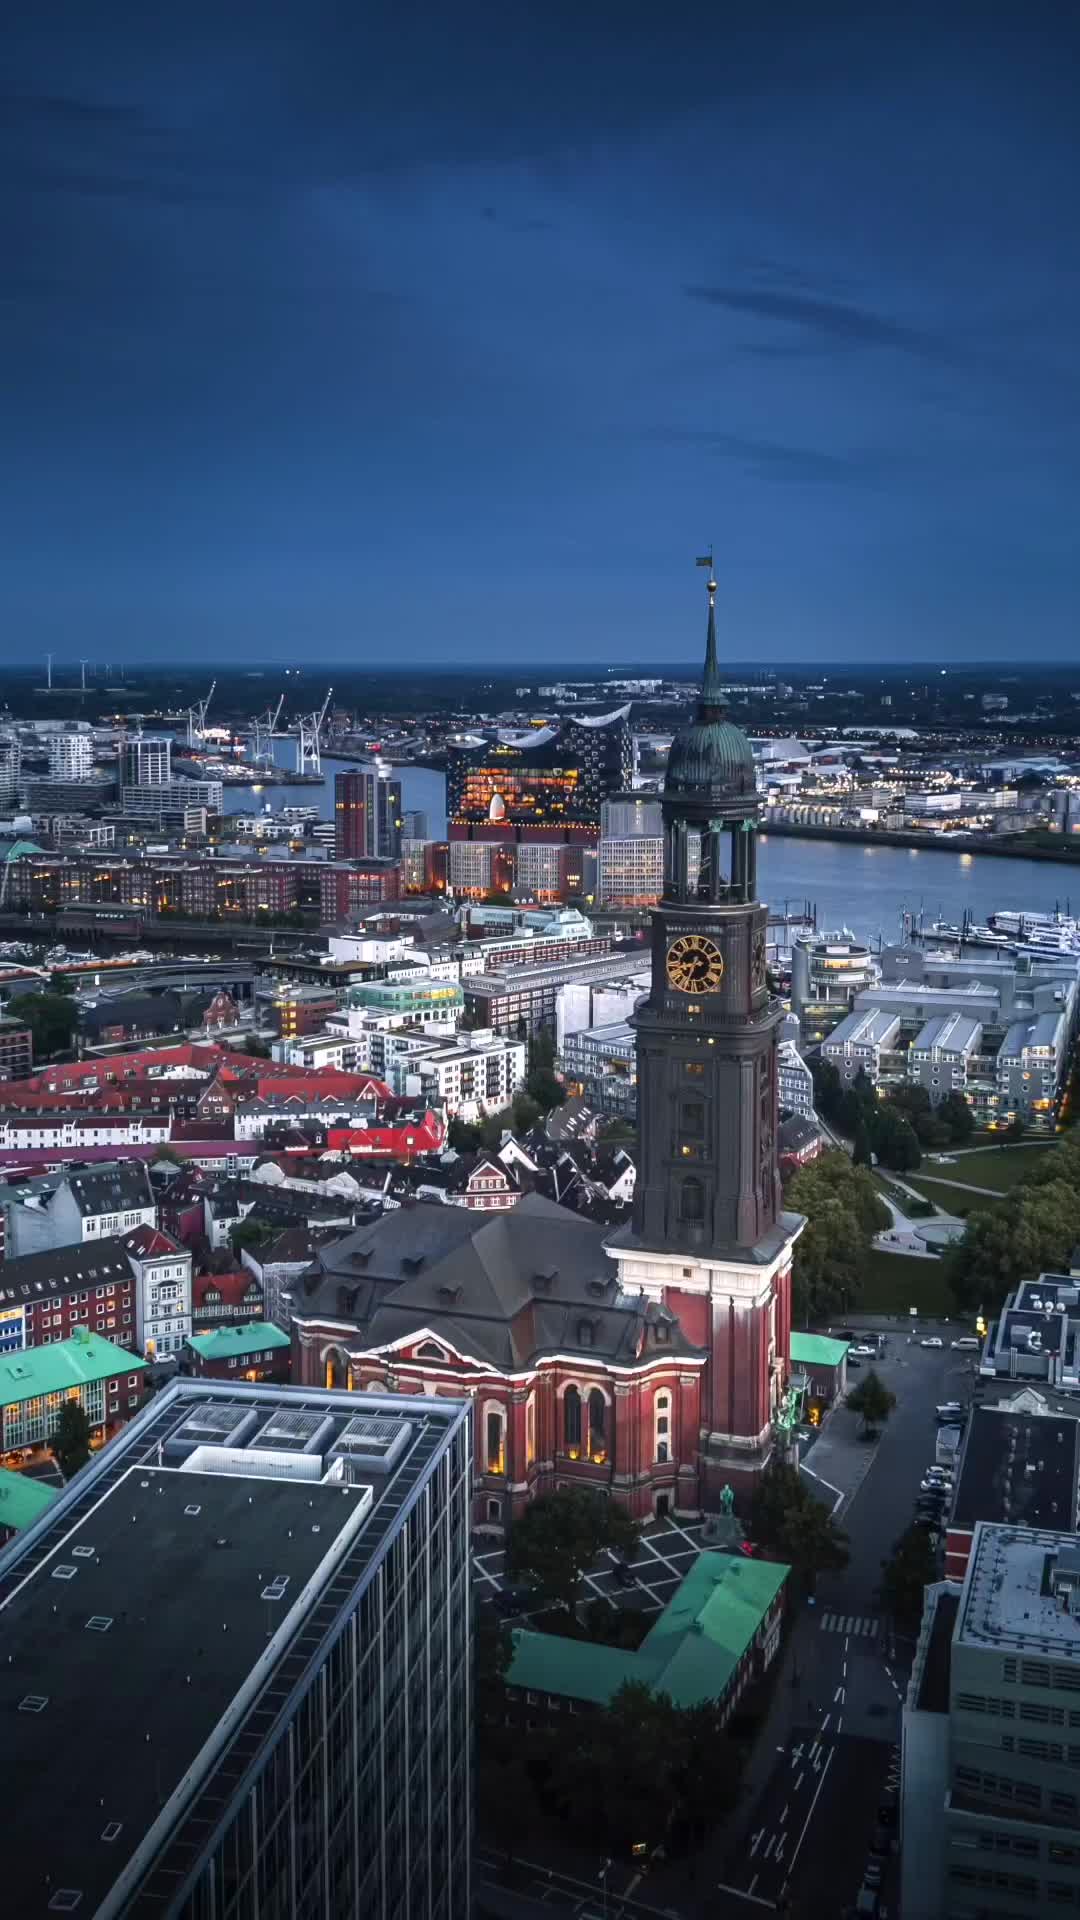 Hamburg Nights: Discover St. Michael’s & Elbphilharmonie